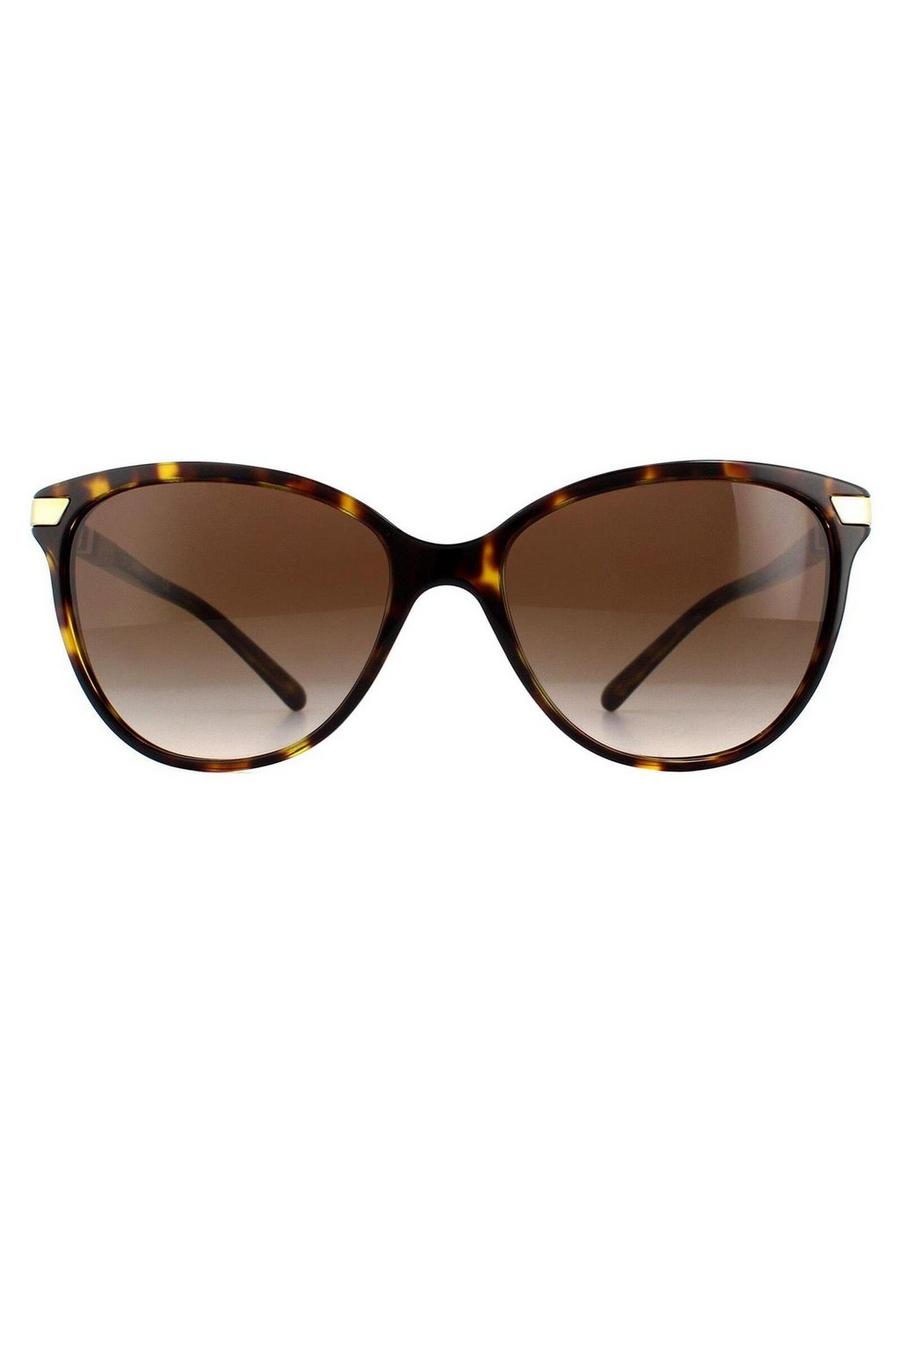 Cat Eye Dark Havana With Gold Detailing Brown Gradient BE4216 Sunglasses